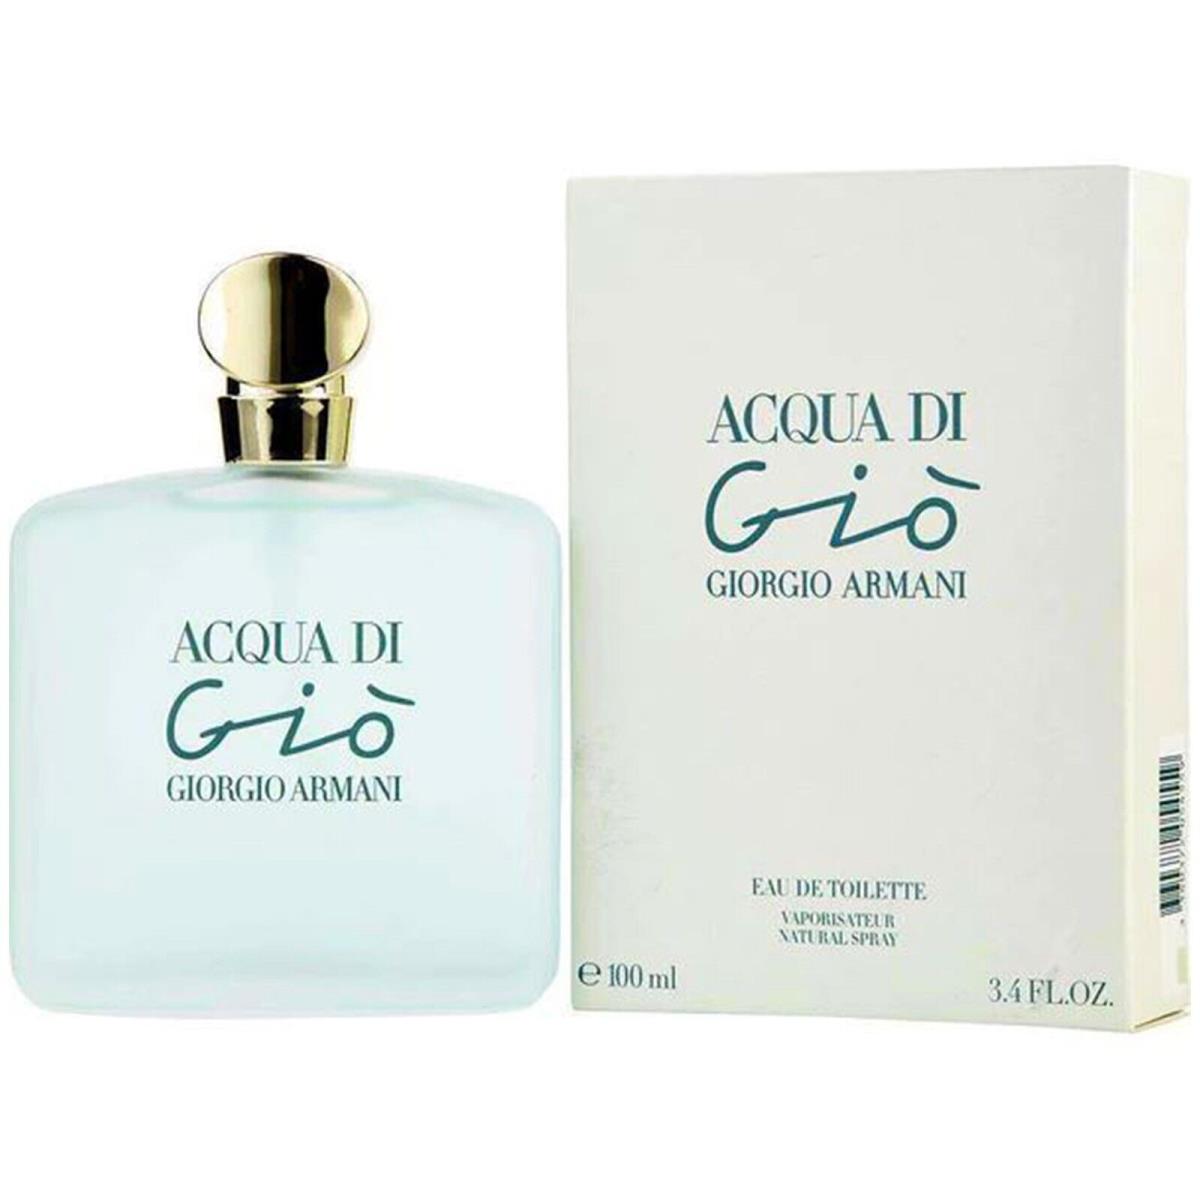 Giorgio Armani perfume,cologne,fragrance,parfum 